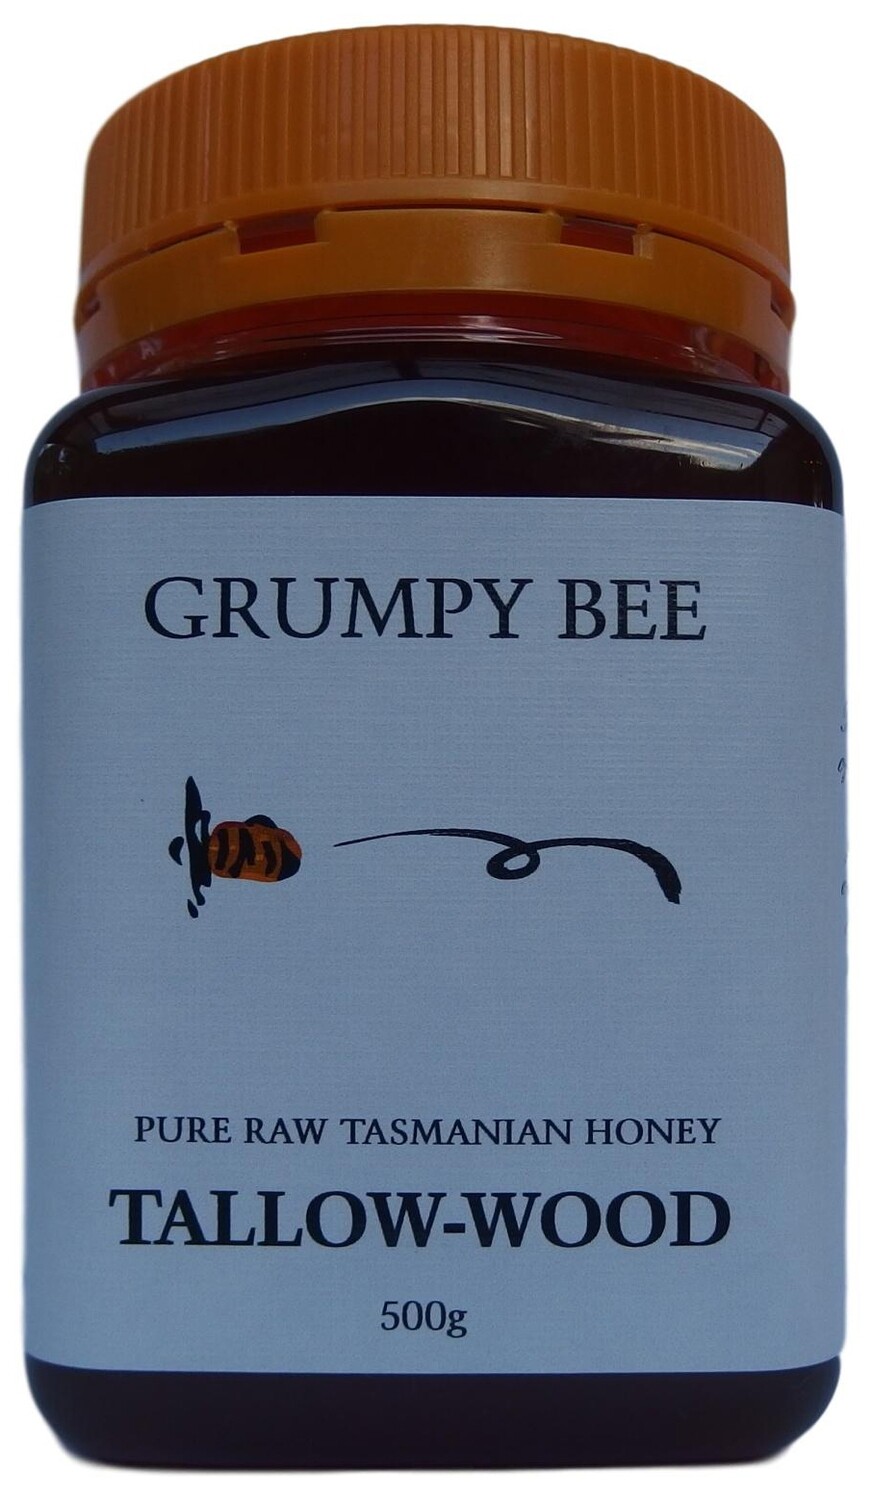 Grumpy Bee Tallow Wood Honey 500g